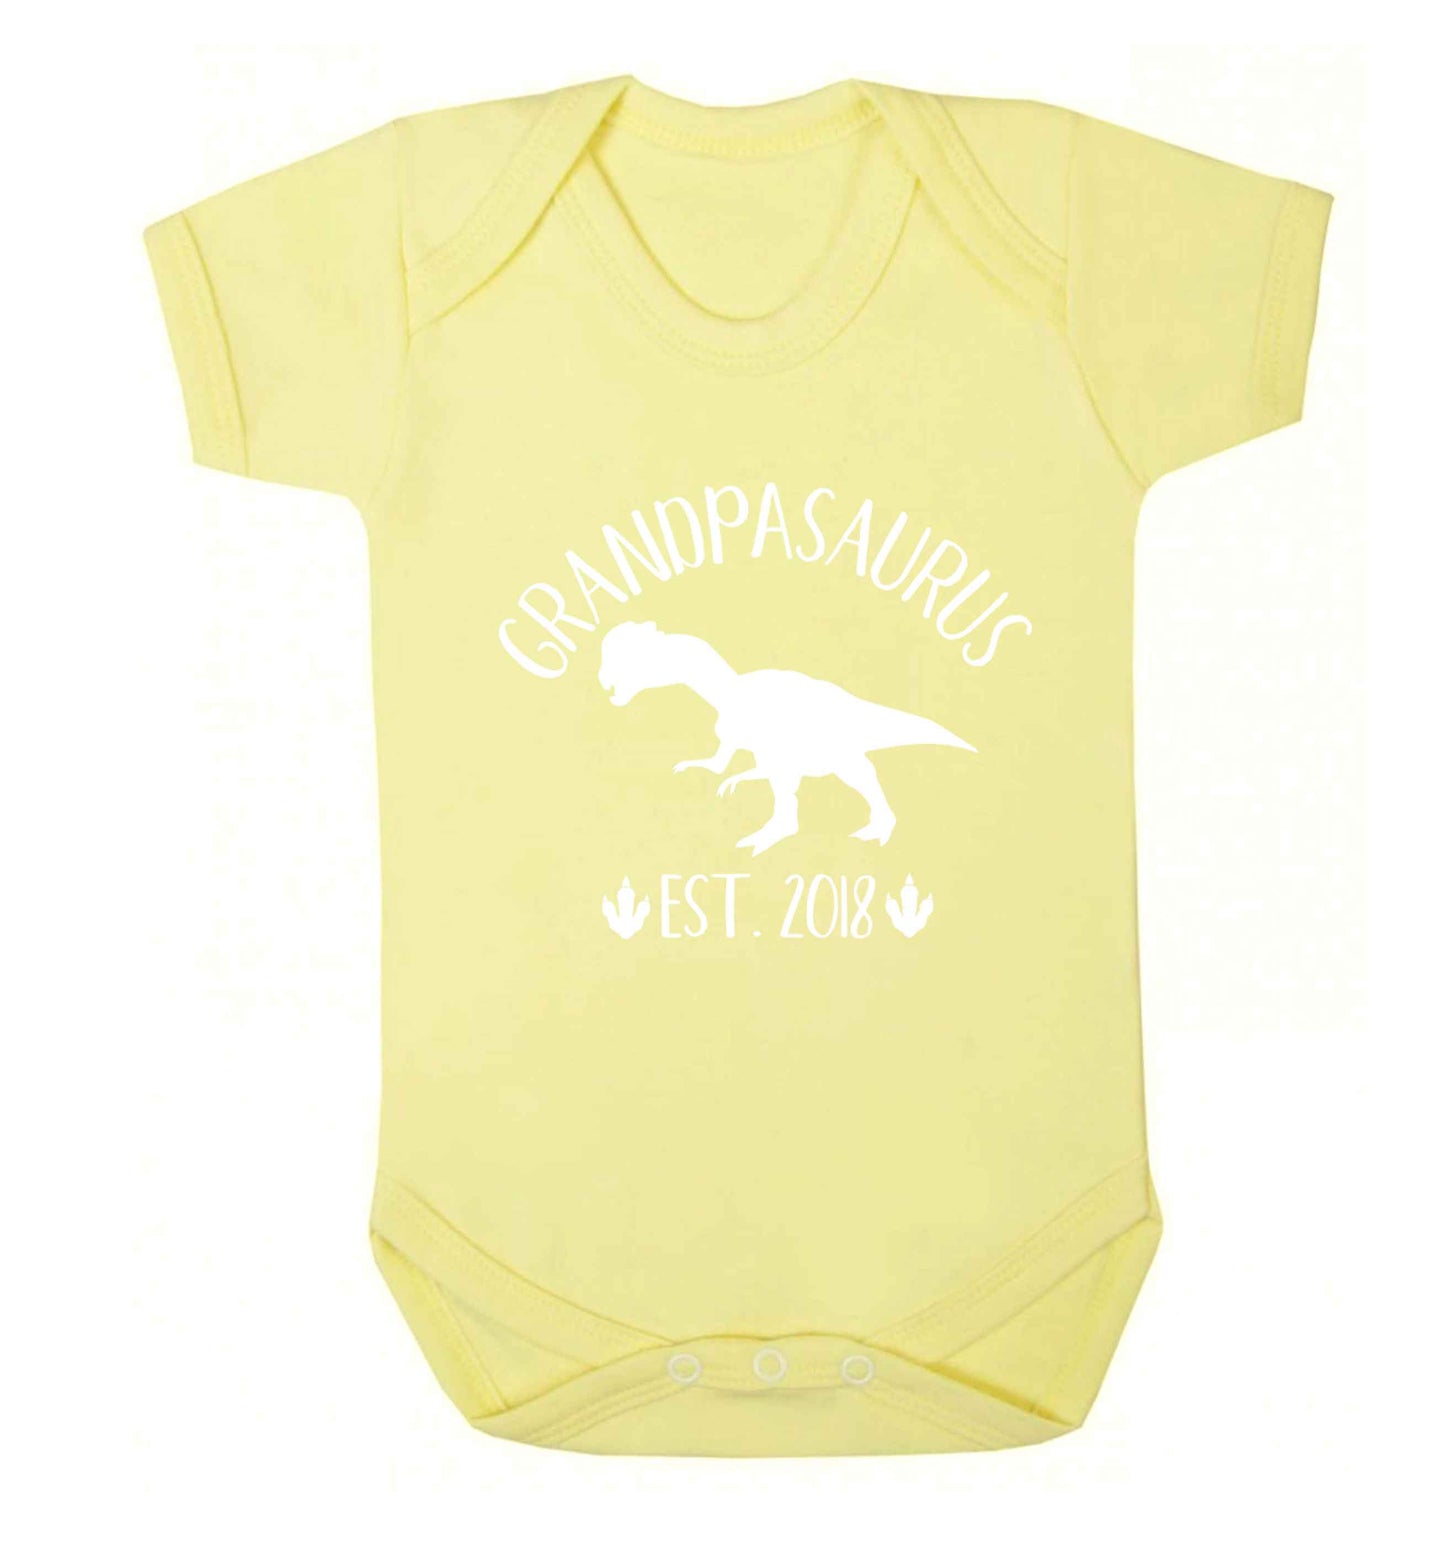 Personalised grandpasaurus since (custom date) Baby Vest pale yellow 18-24 months